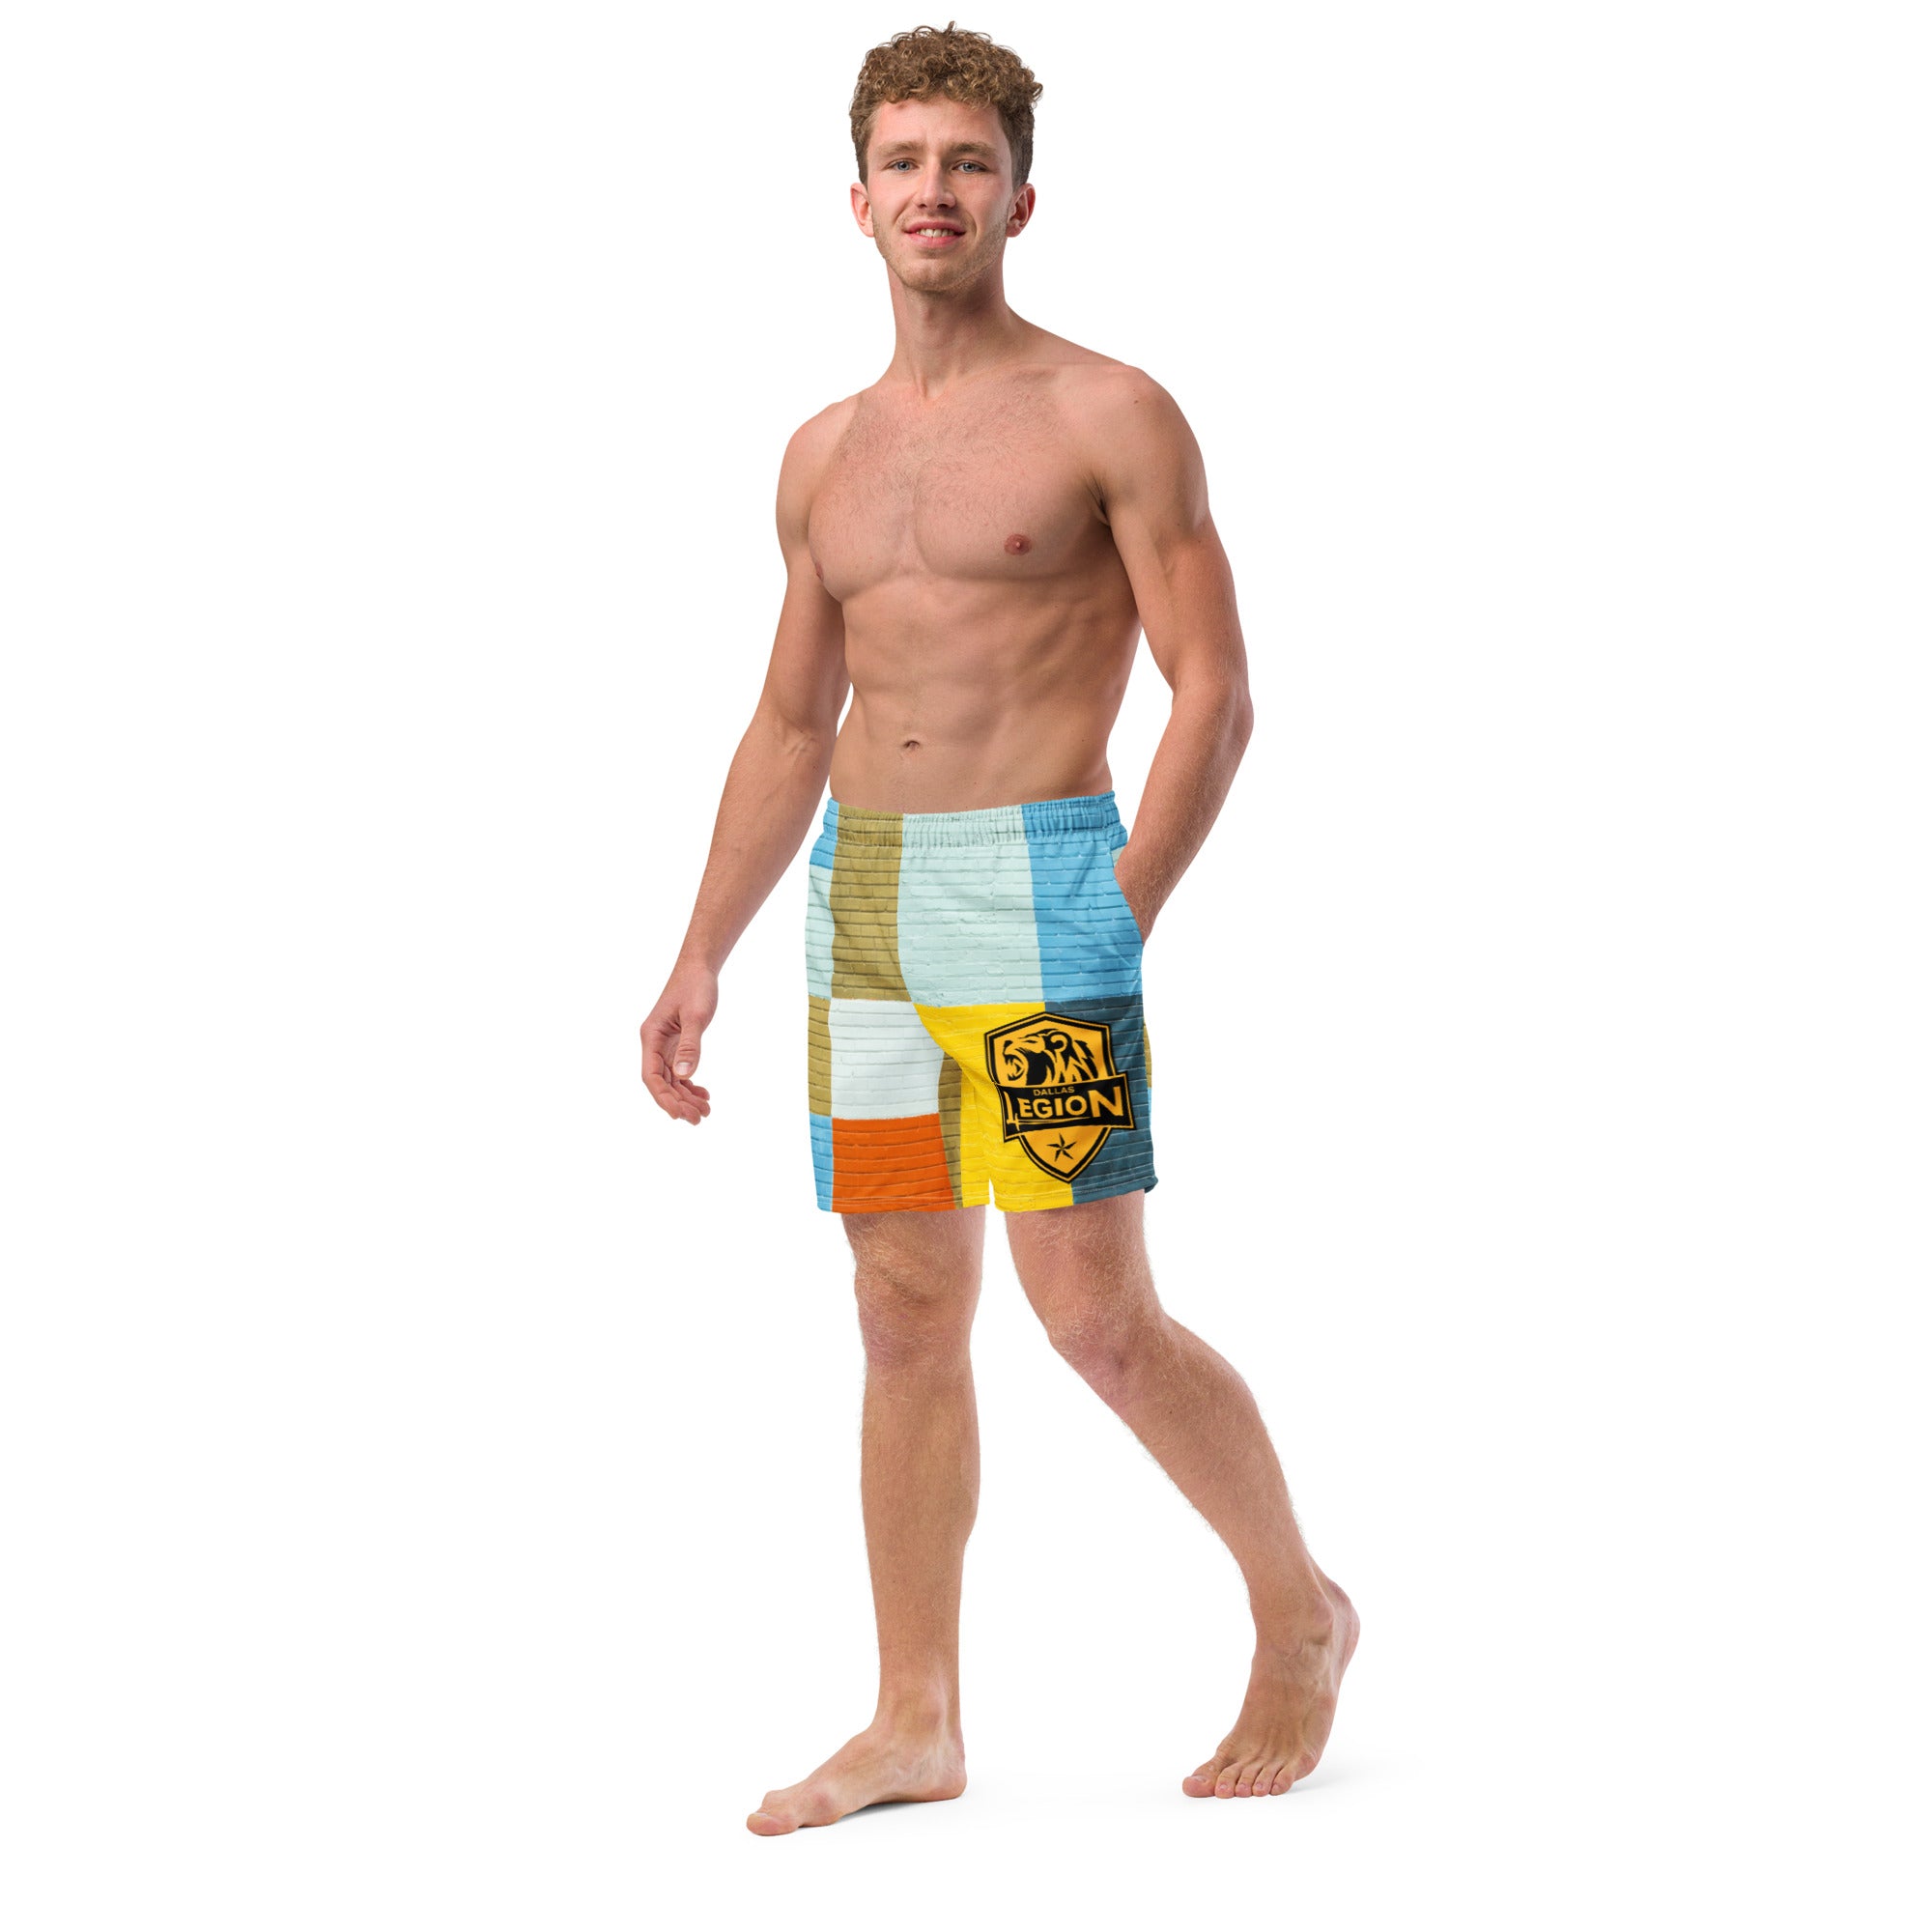 Men's swim trunks - Plaid